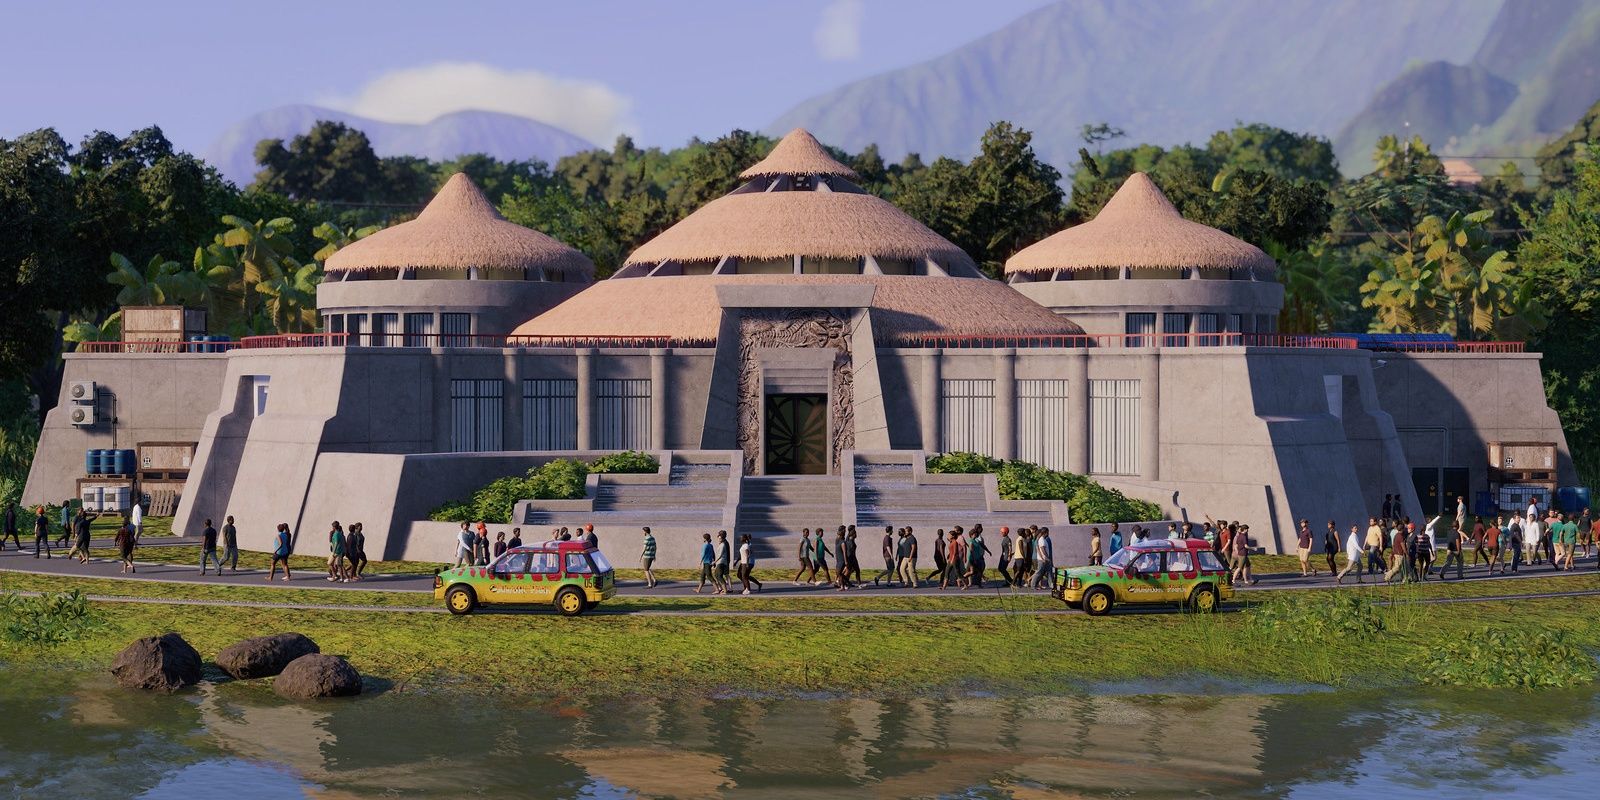 The visitor center in Jurassic World Evolution 2